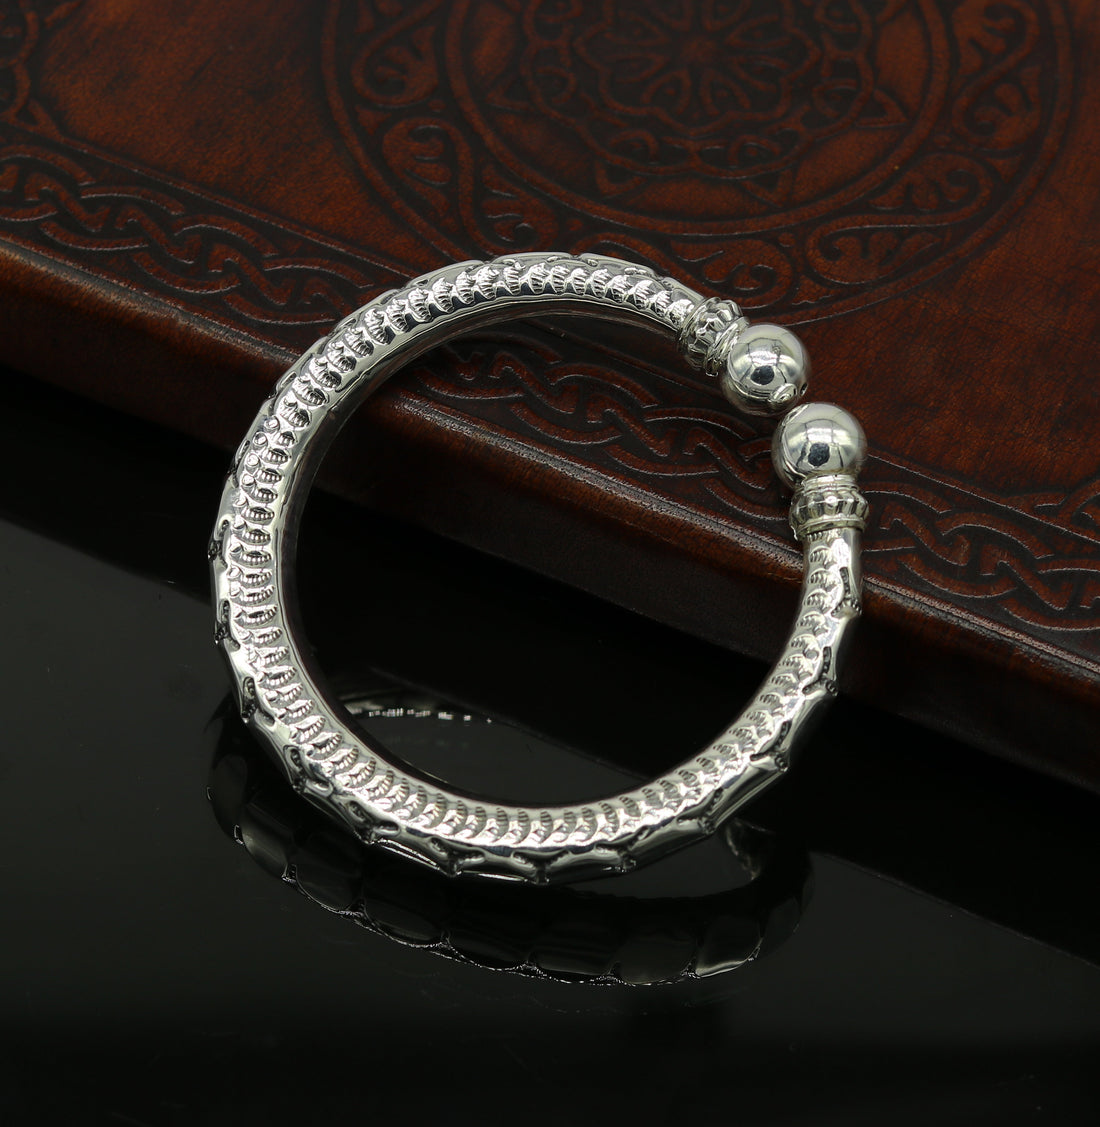 925 sterling silver handmade gorgeous customized work bangle bracelet kada, vintage antique design stylish bangle unisex jewelry nsk330 - TRIBAL ORNAMENTS